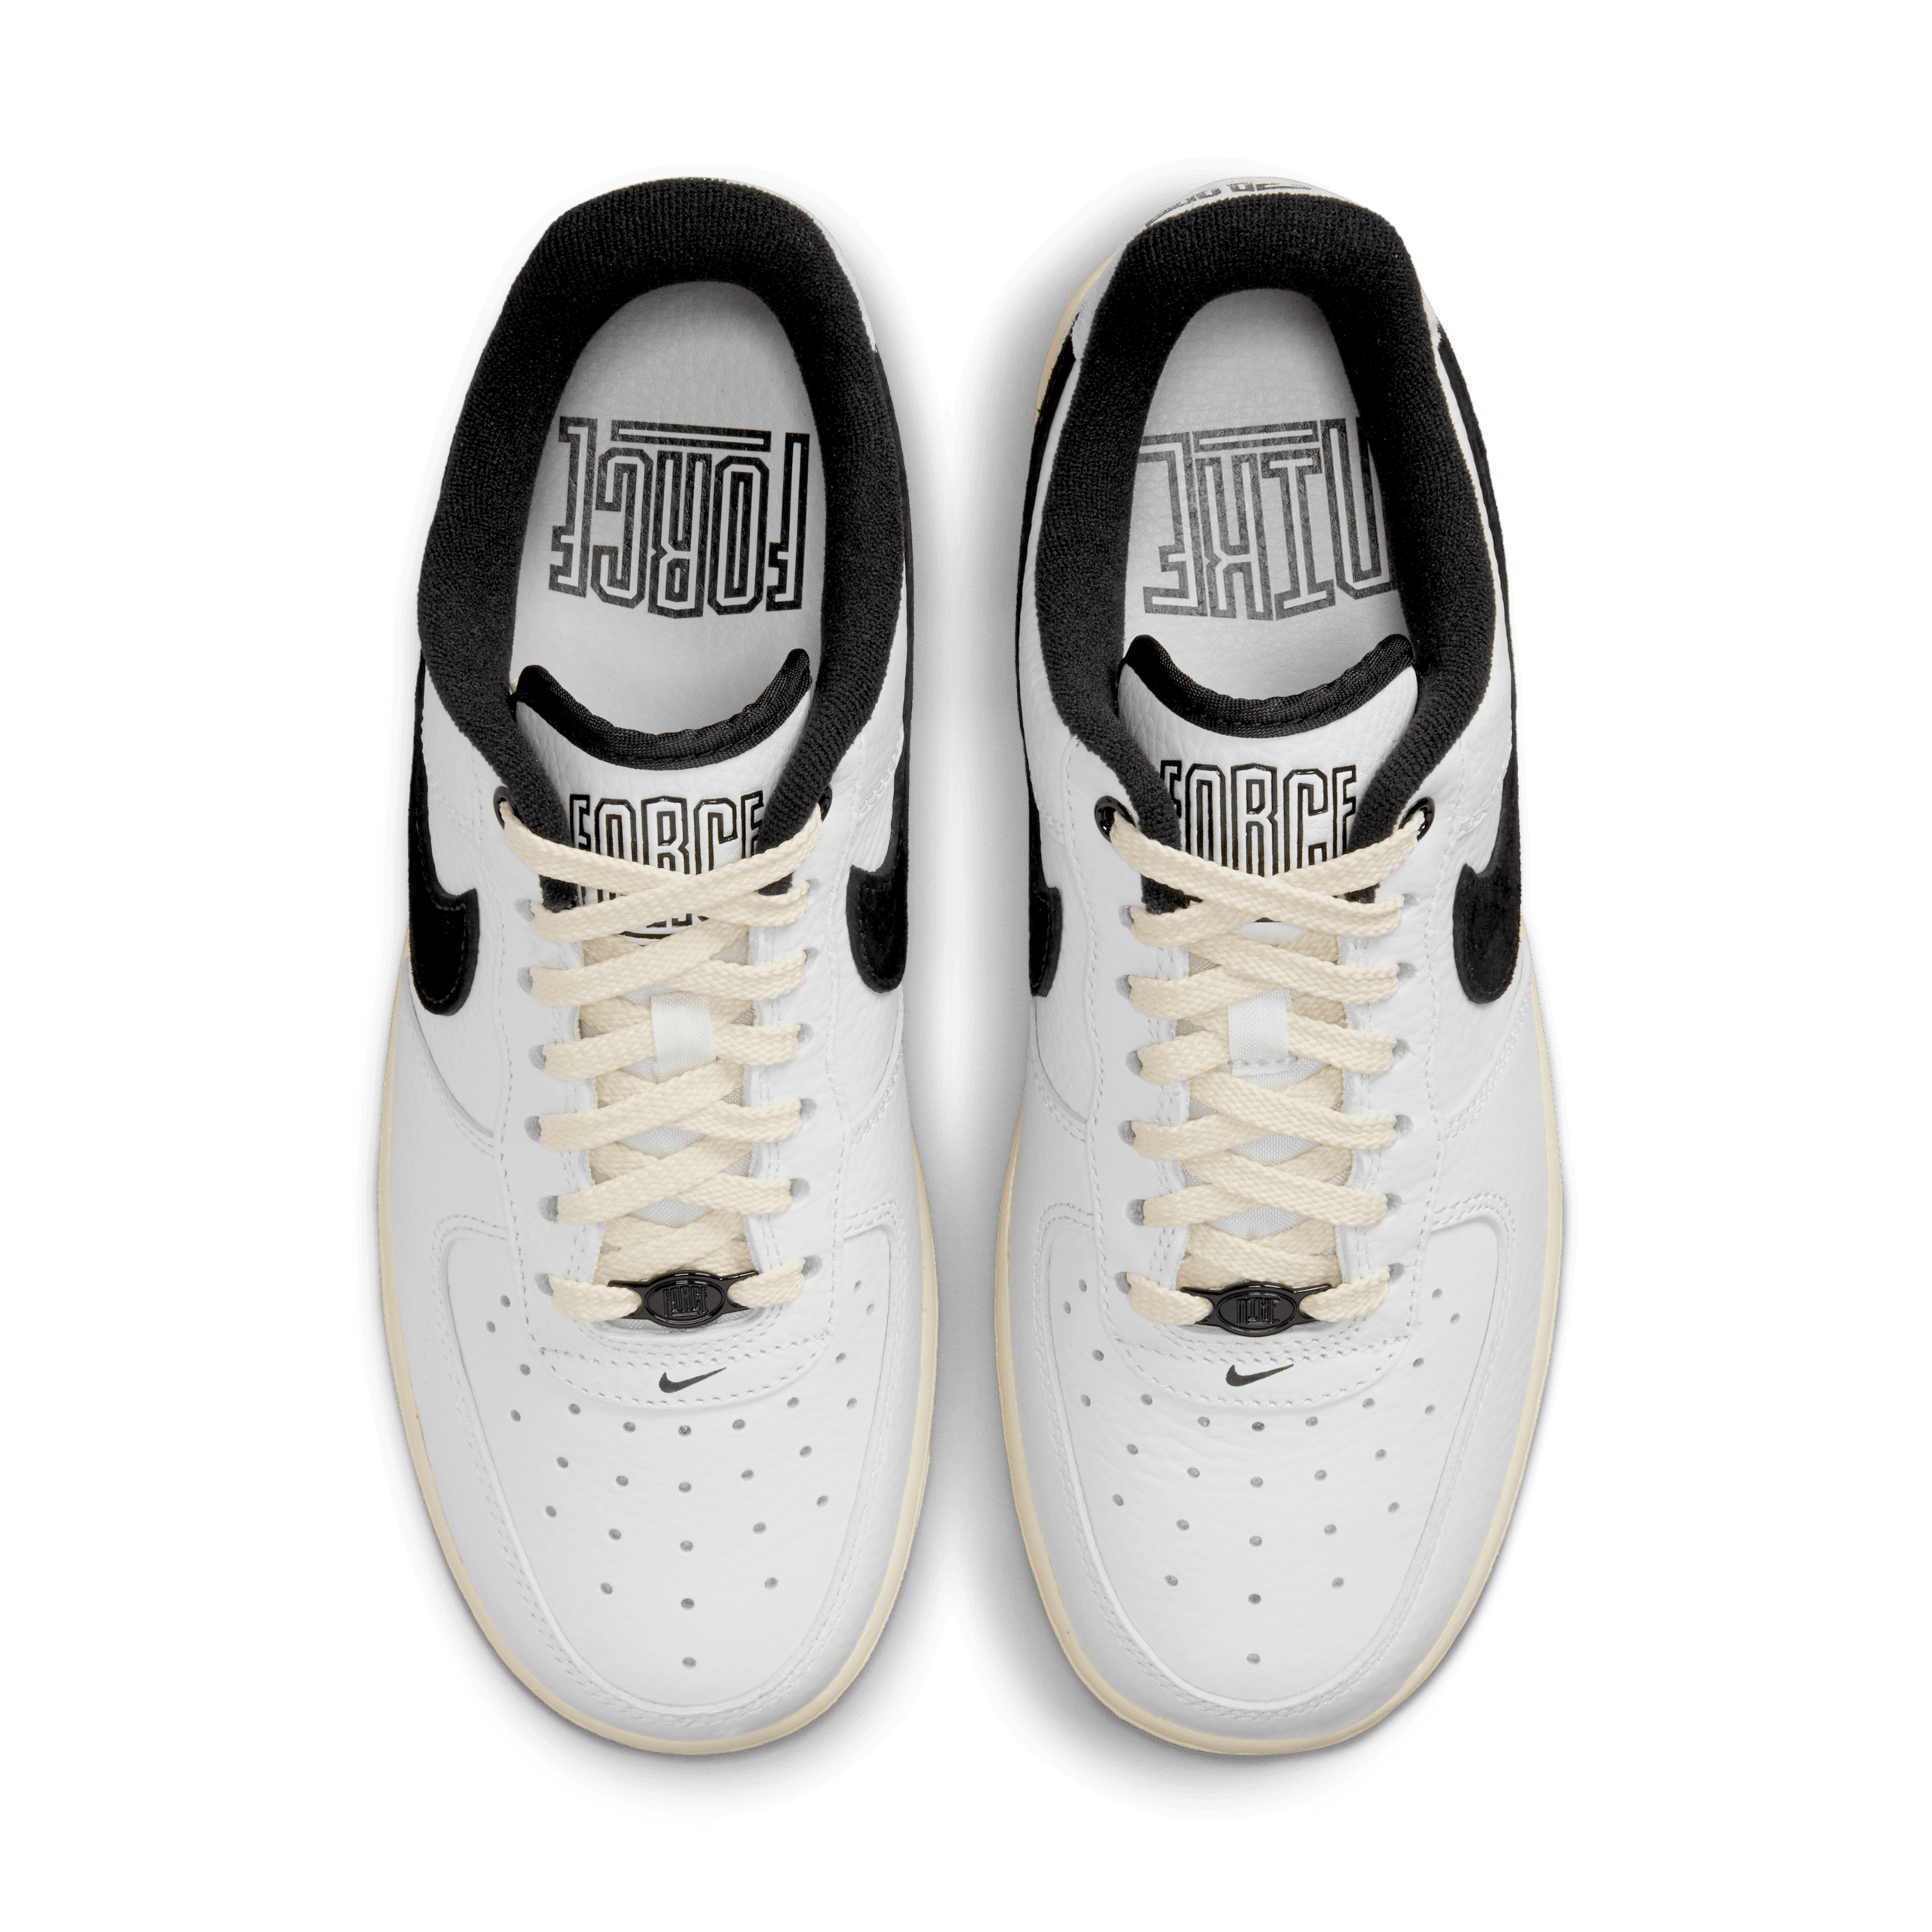 Nike Air Force 1 '07 LX Schuhe für Damen - Weiß